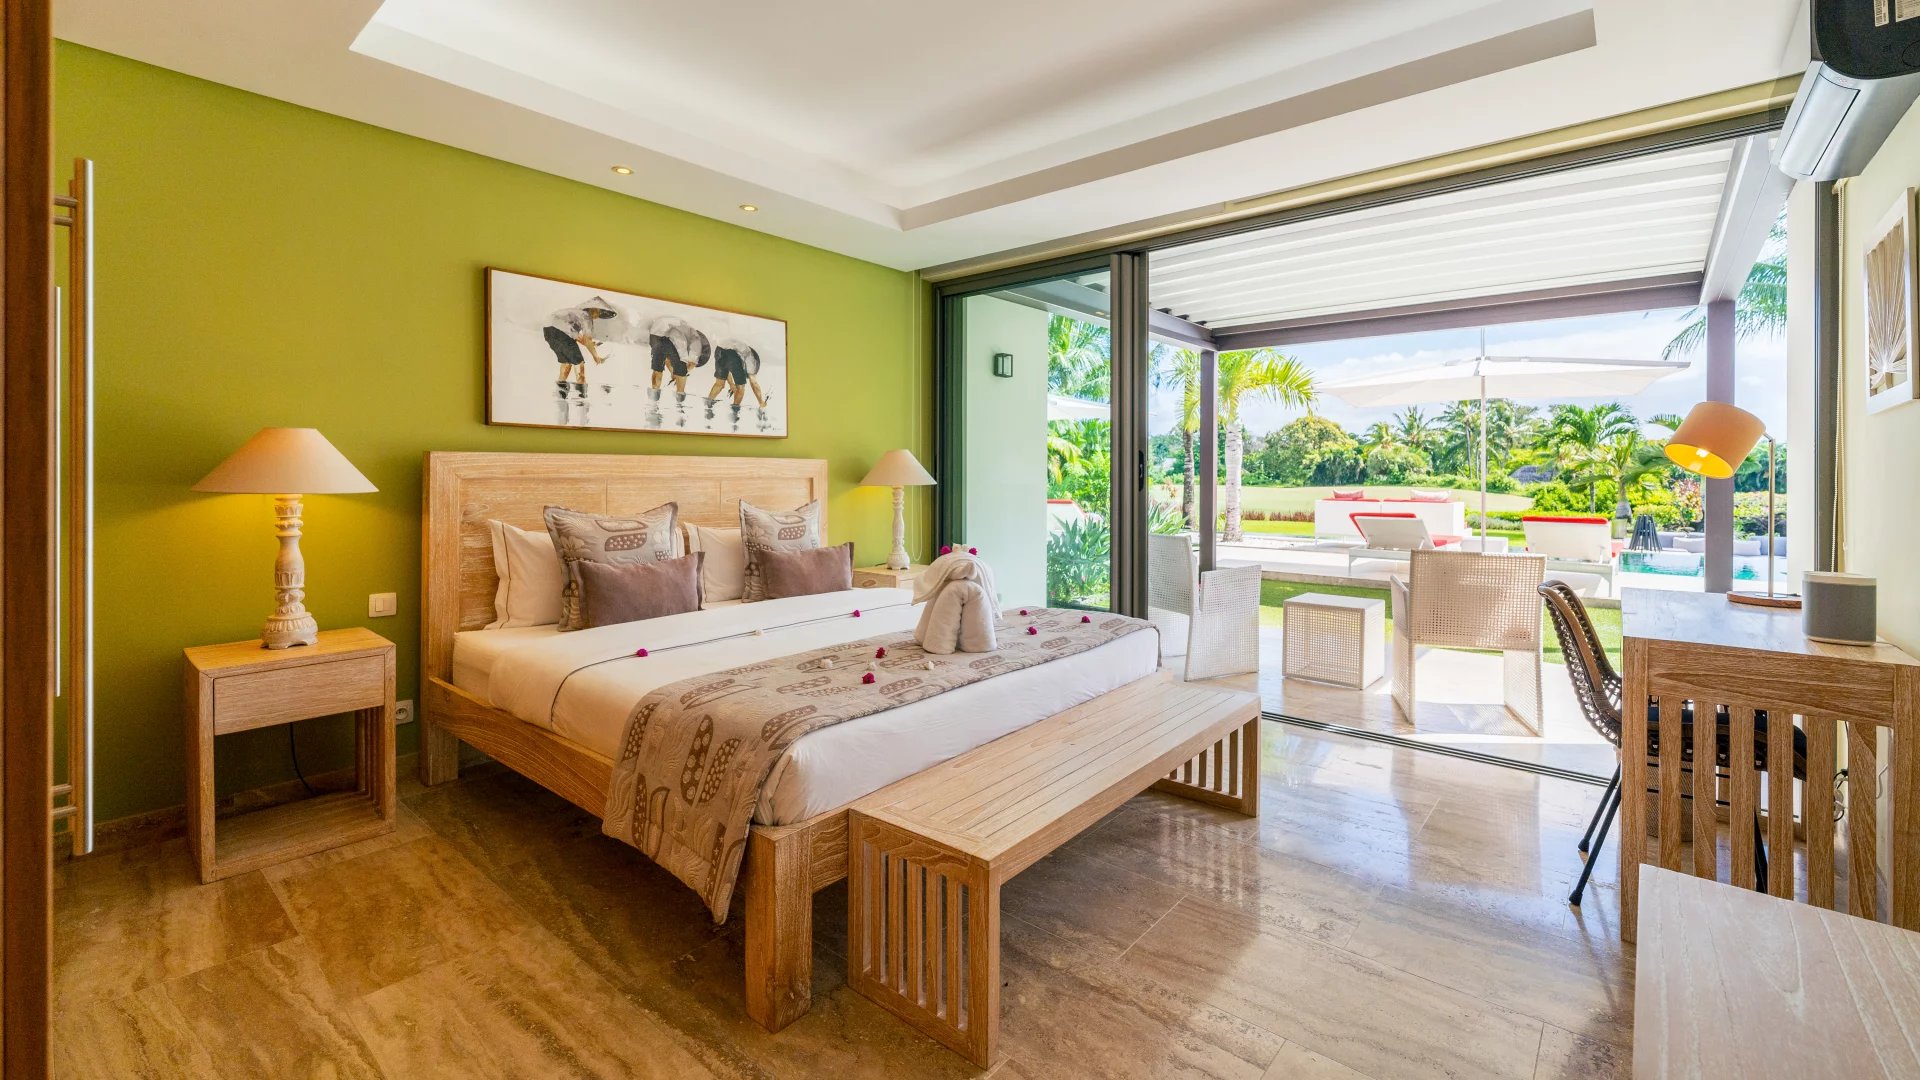 BEAU CHAMP - Sumptuous villa on the golf course - 4 bedrooms - picture 16 title=